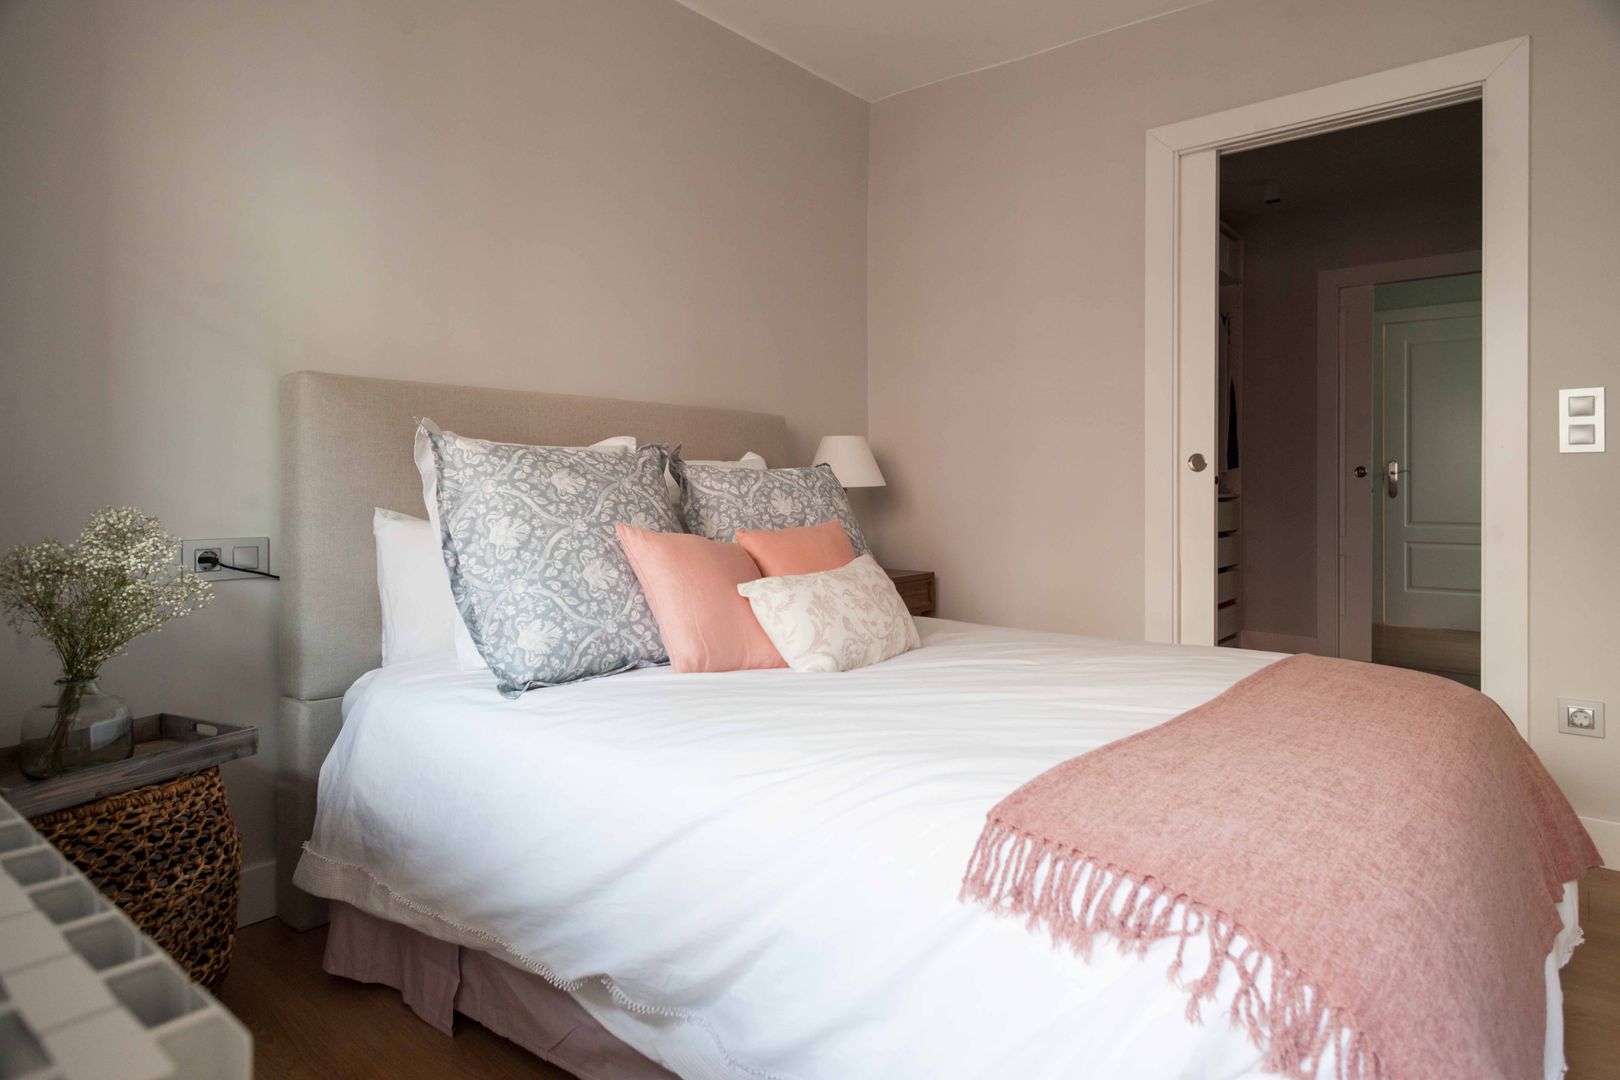 Un pasillo donde vivir, Espacio Sutil Espacio Sutil Camera da letto in stile scandinavo